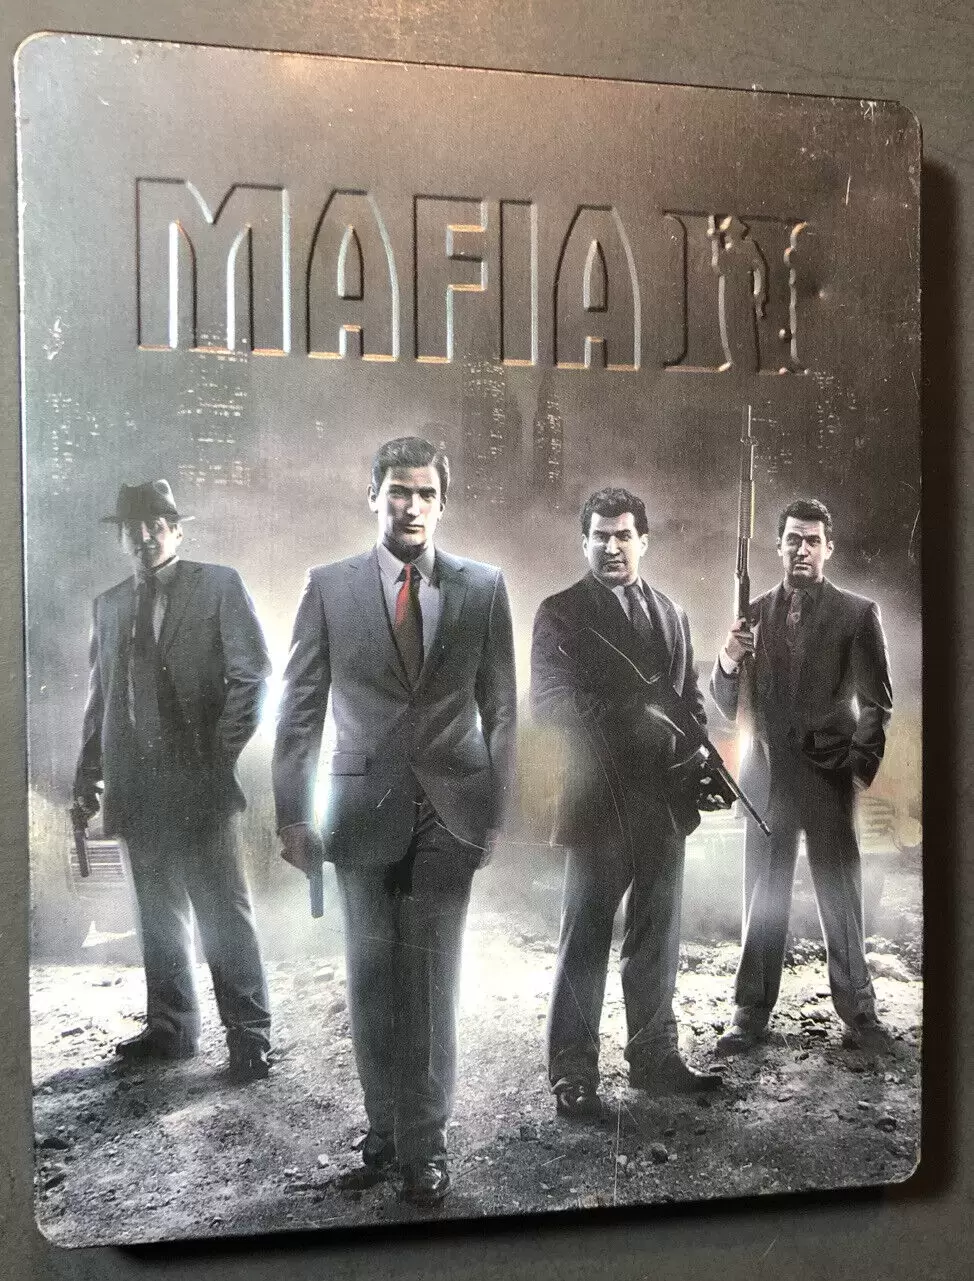 Mafia II Playstation 3 PS3 Used